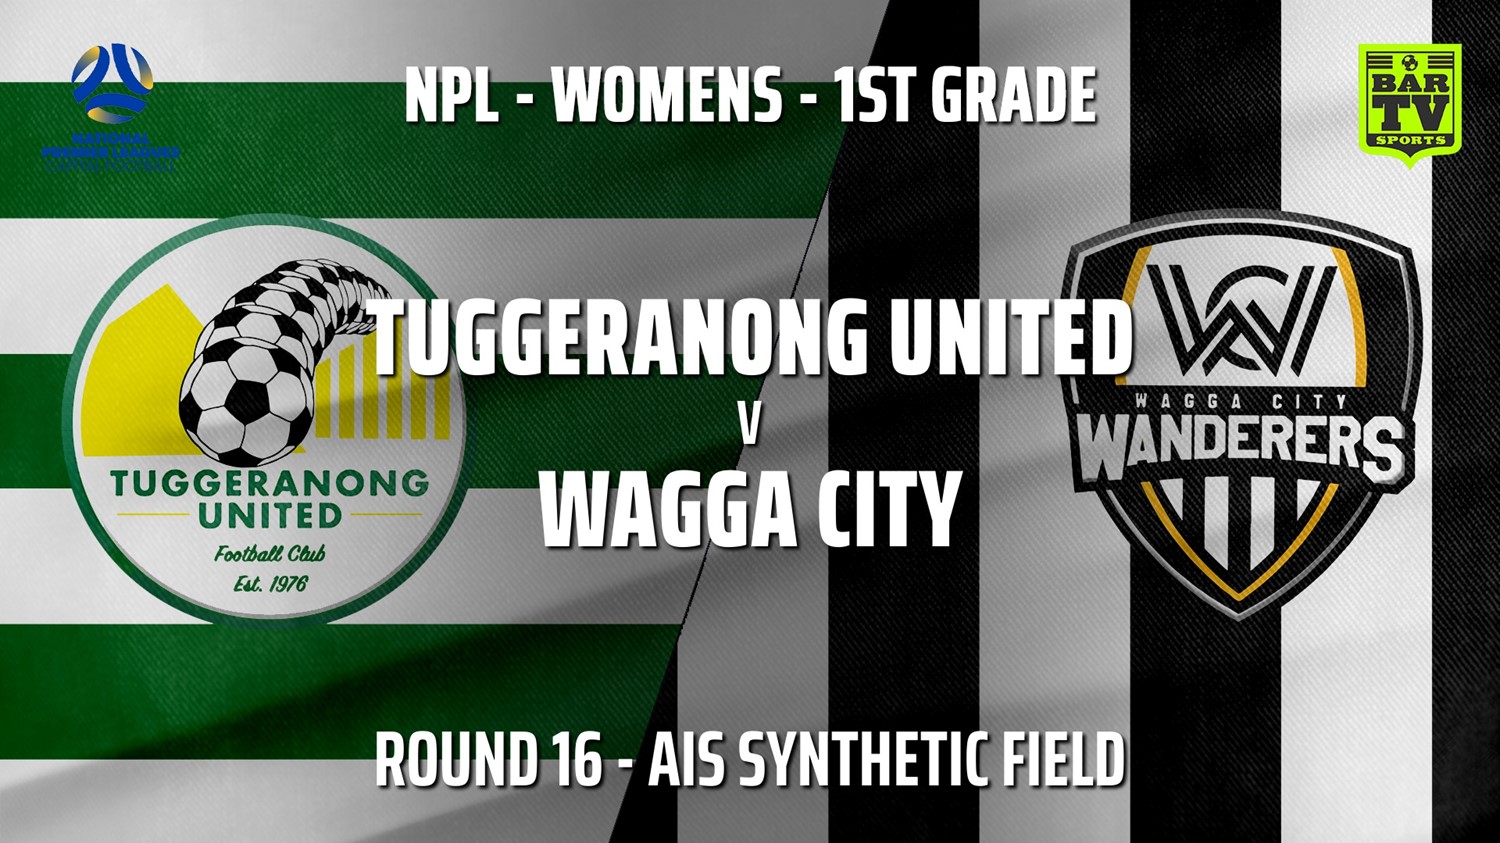 MINI GAME: Capital Womens Round 16 - Tuggeranong United FC (women) v Wagga City Wanderers FC (women) Slate Image